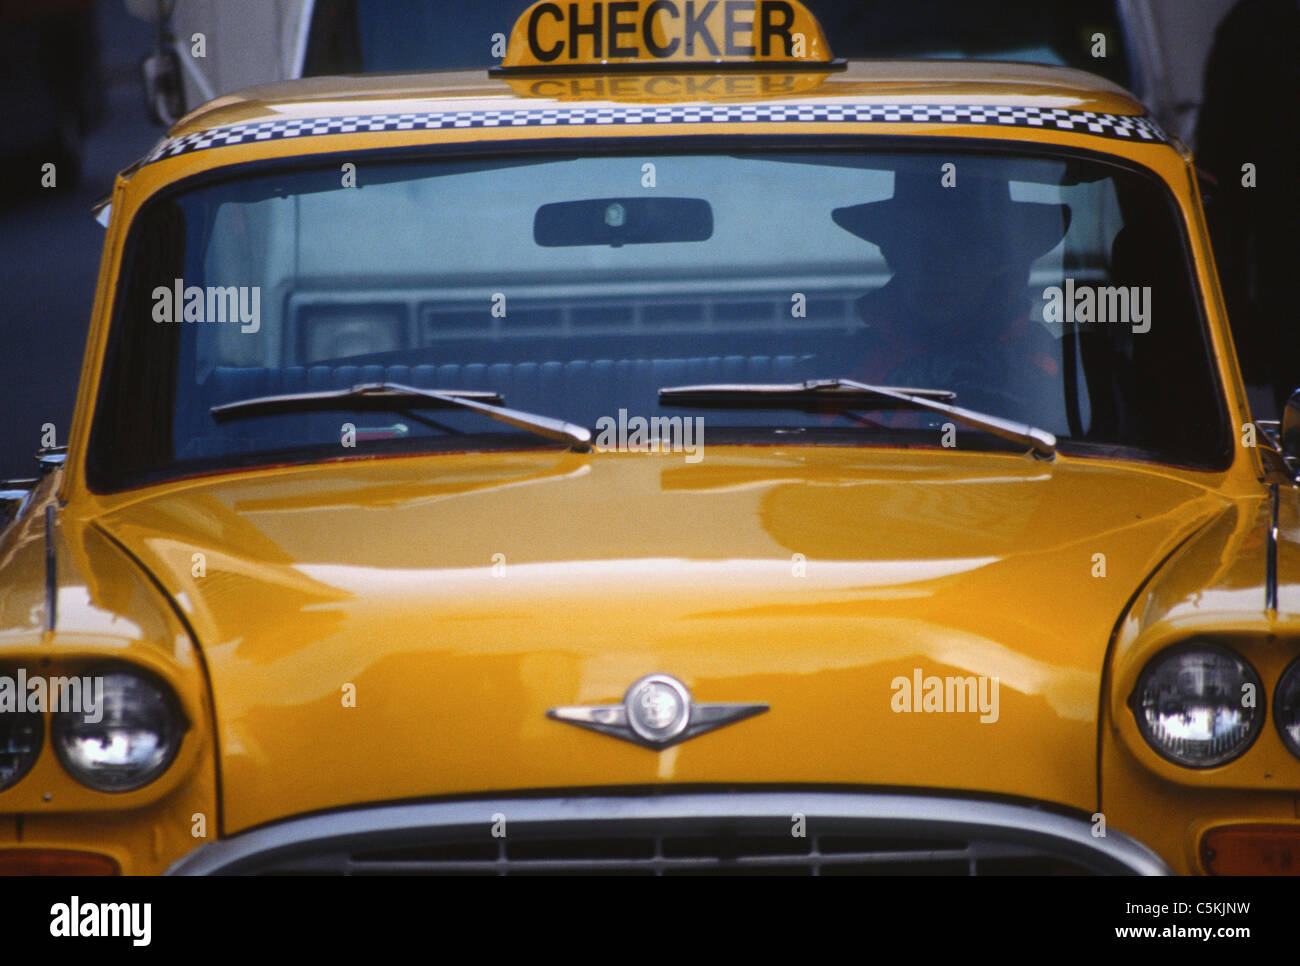 Checker cab on street, NYC Stock Photo